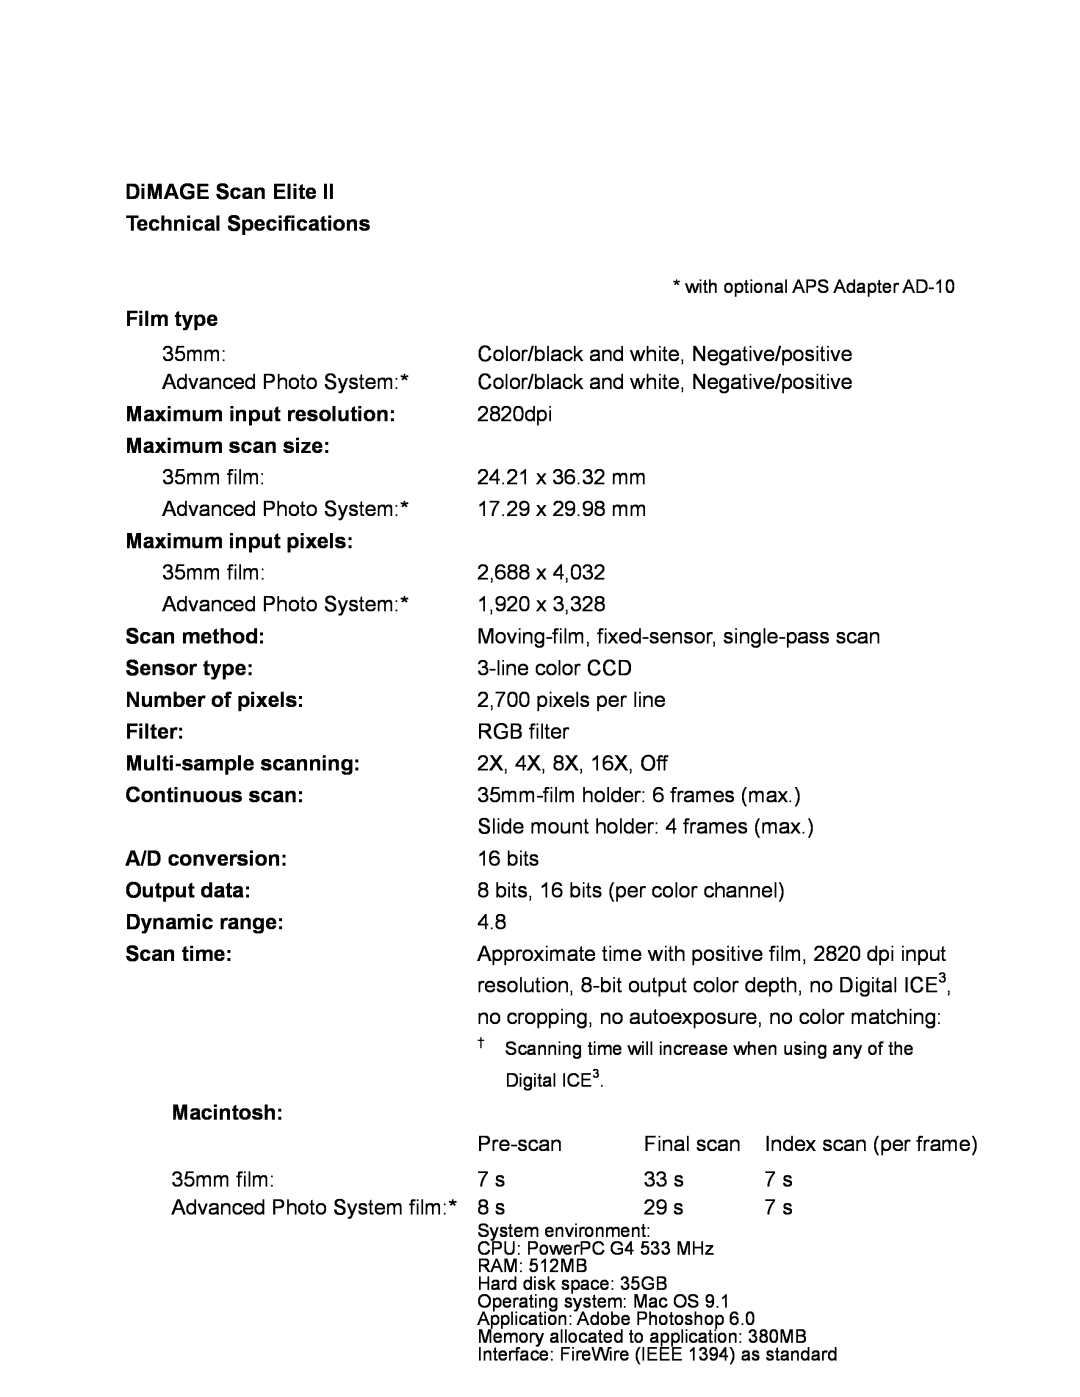 Konica Minolta II technical specifications DiMAGE Scan Elite Technical Specifications 